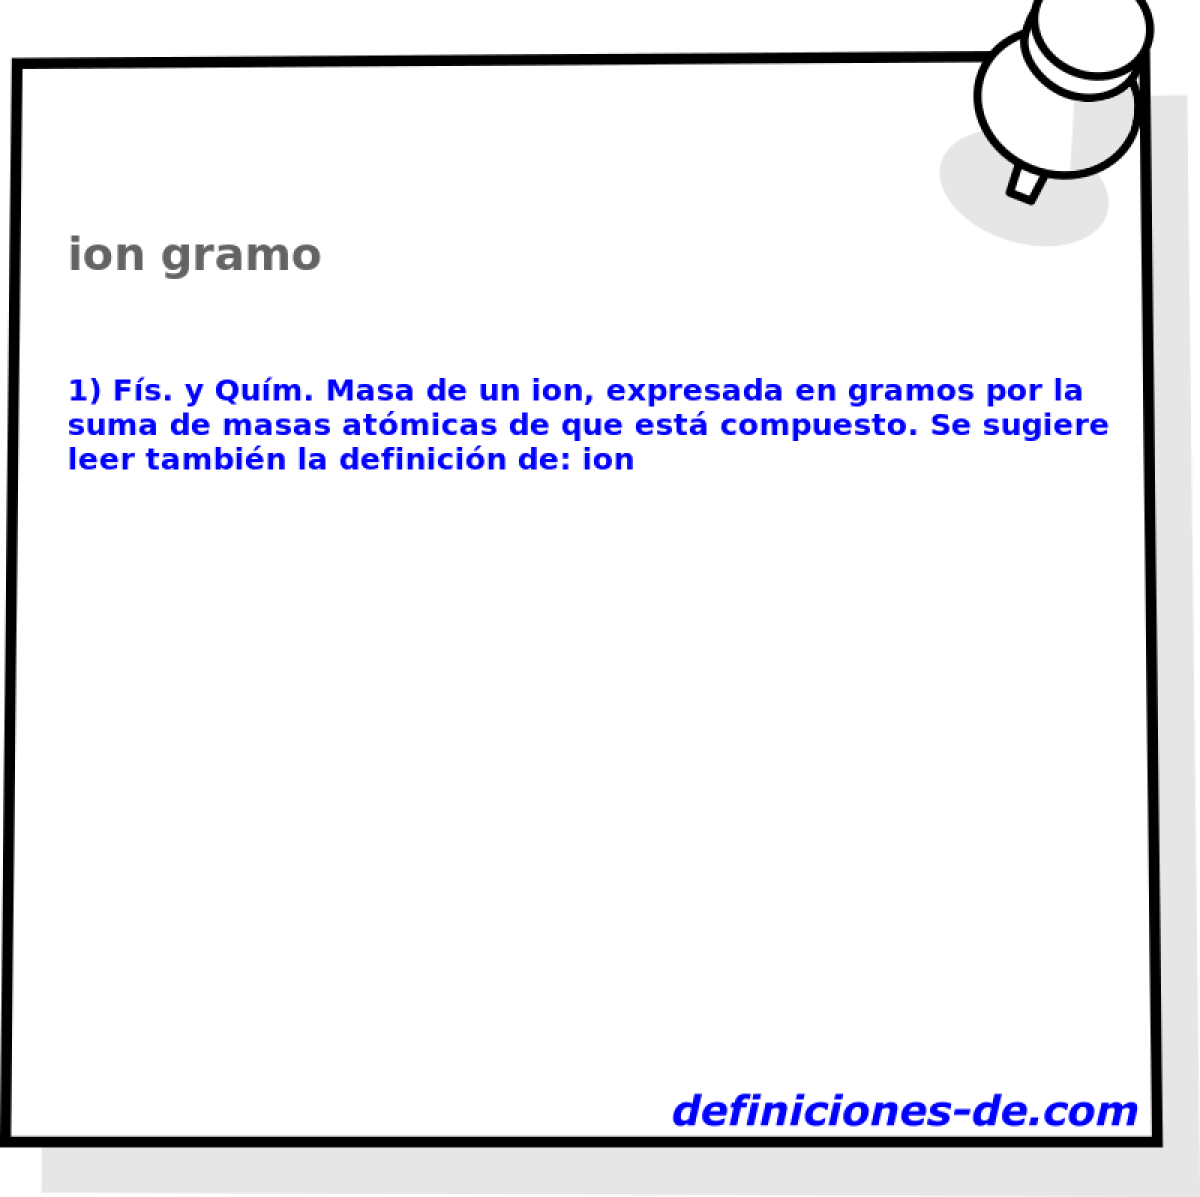 ion gramo 